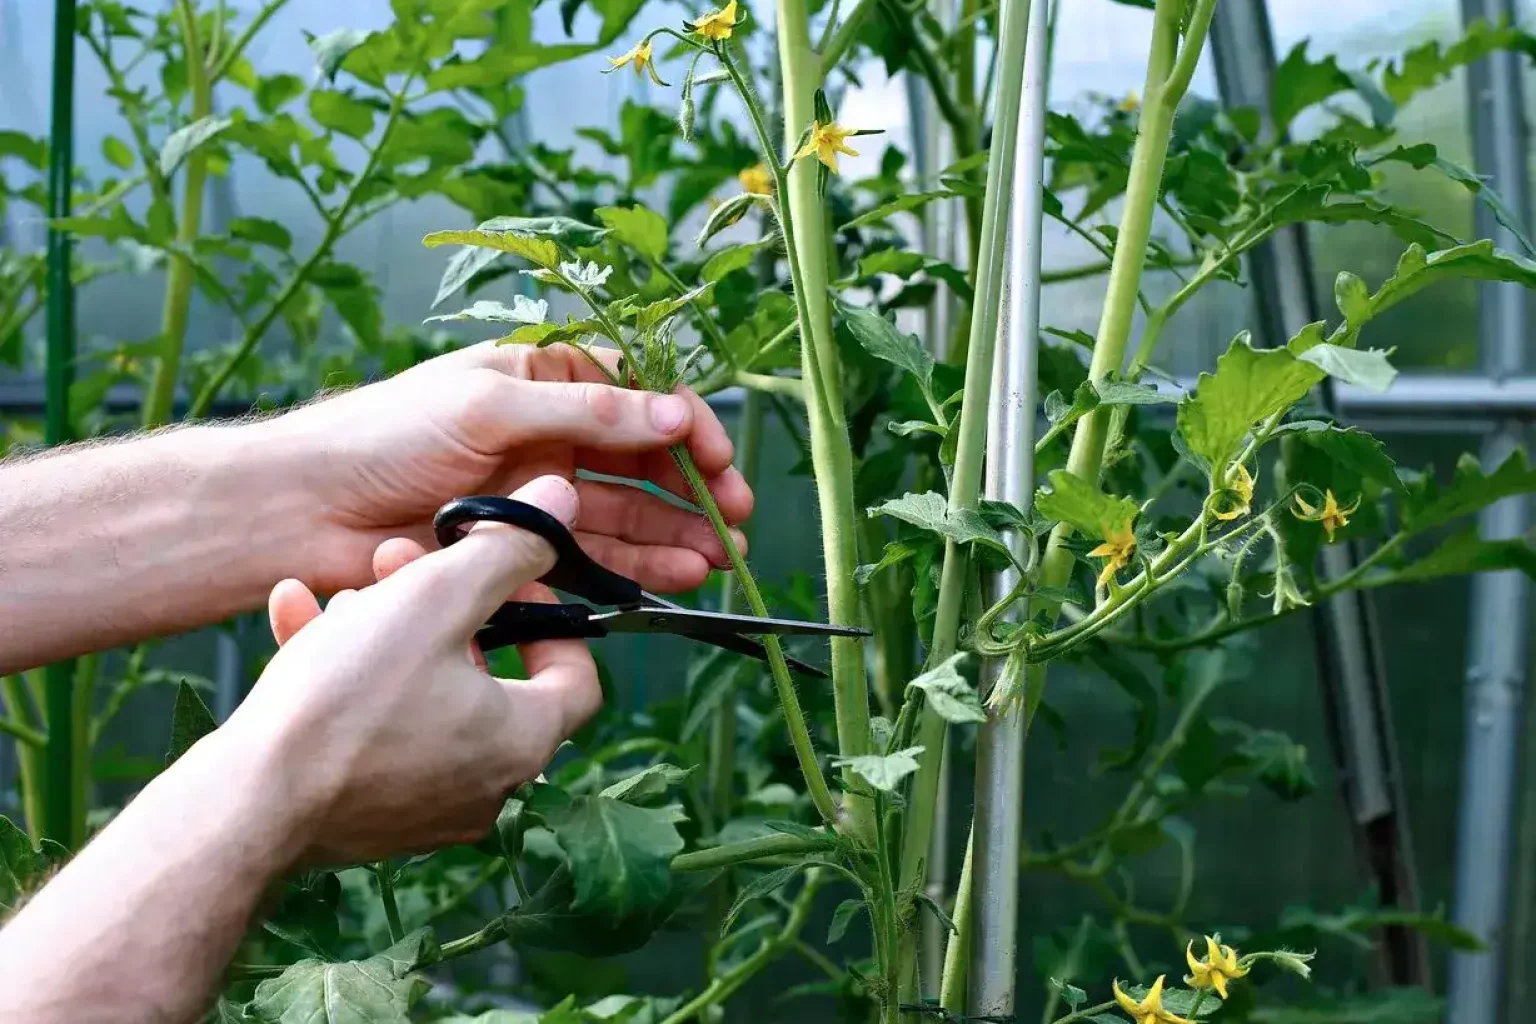 A gardener carefully pruning a tomato plant in a home garden.